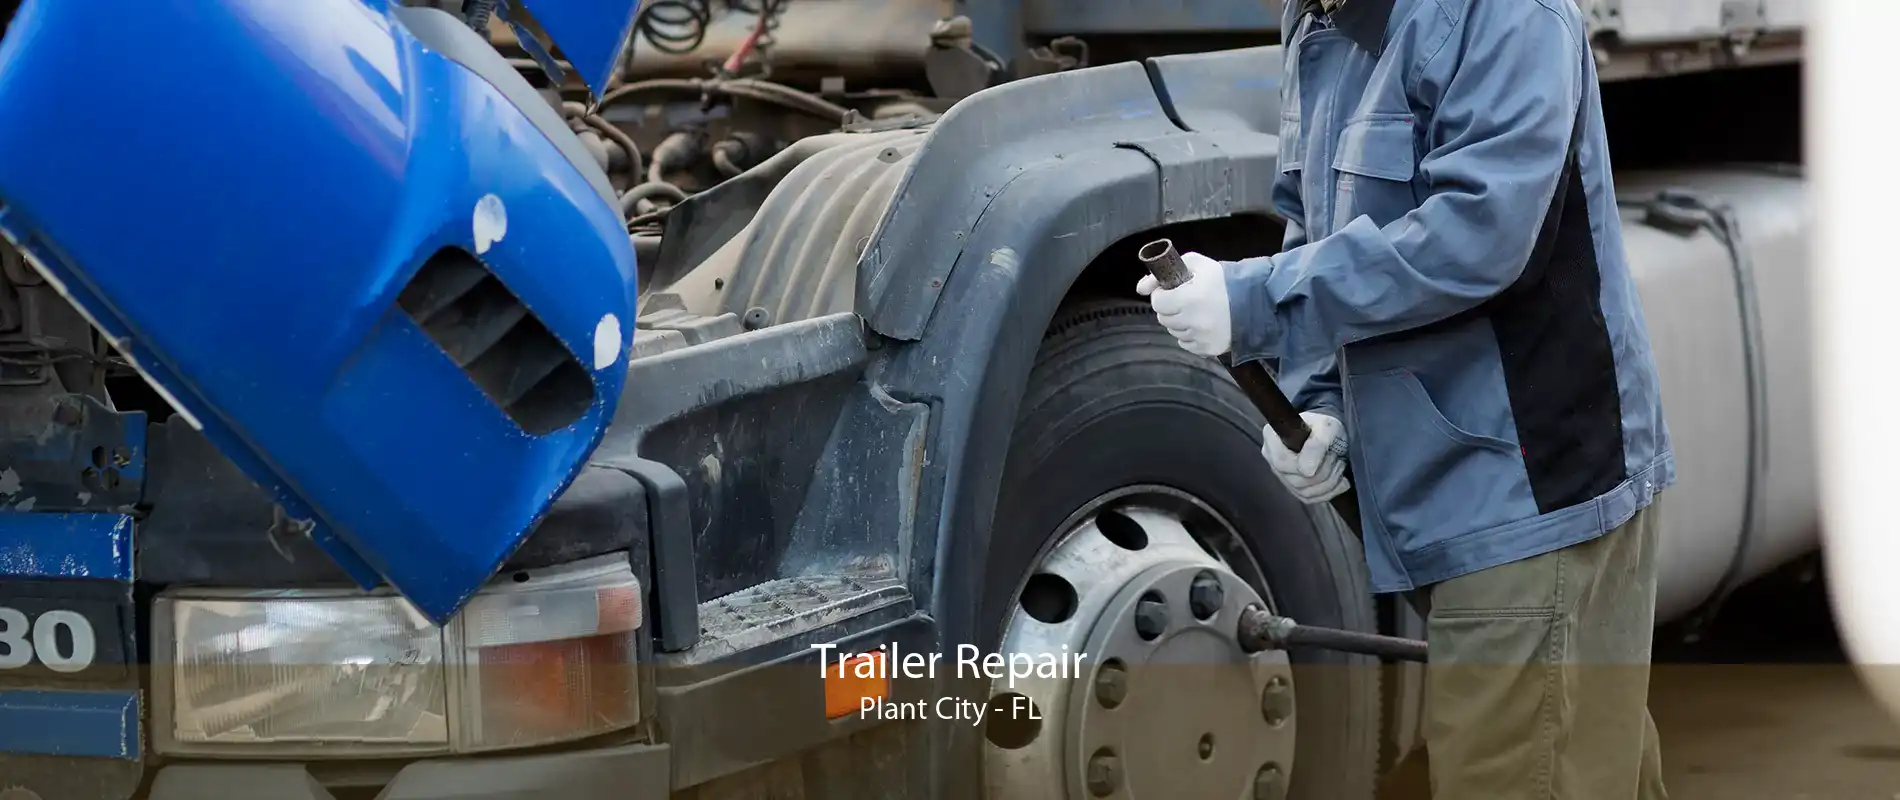 Trailer Repair Plant City - FL